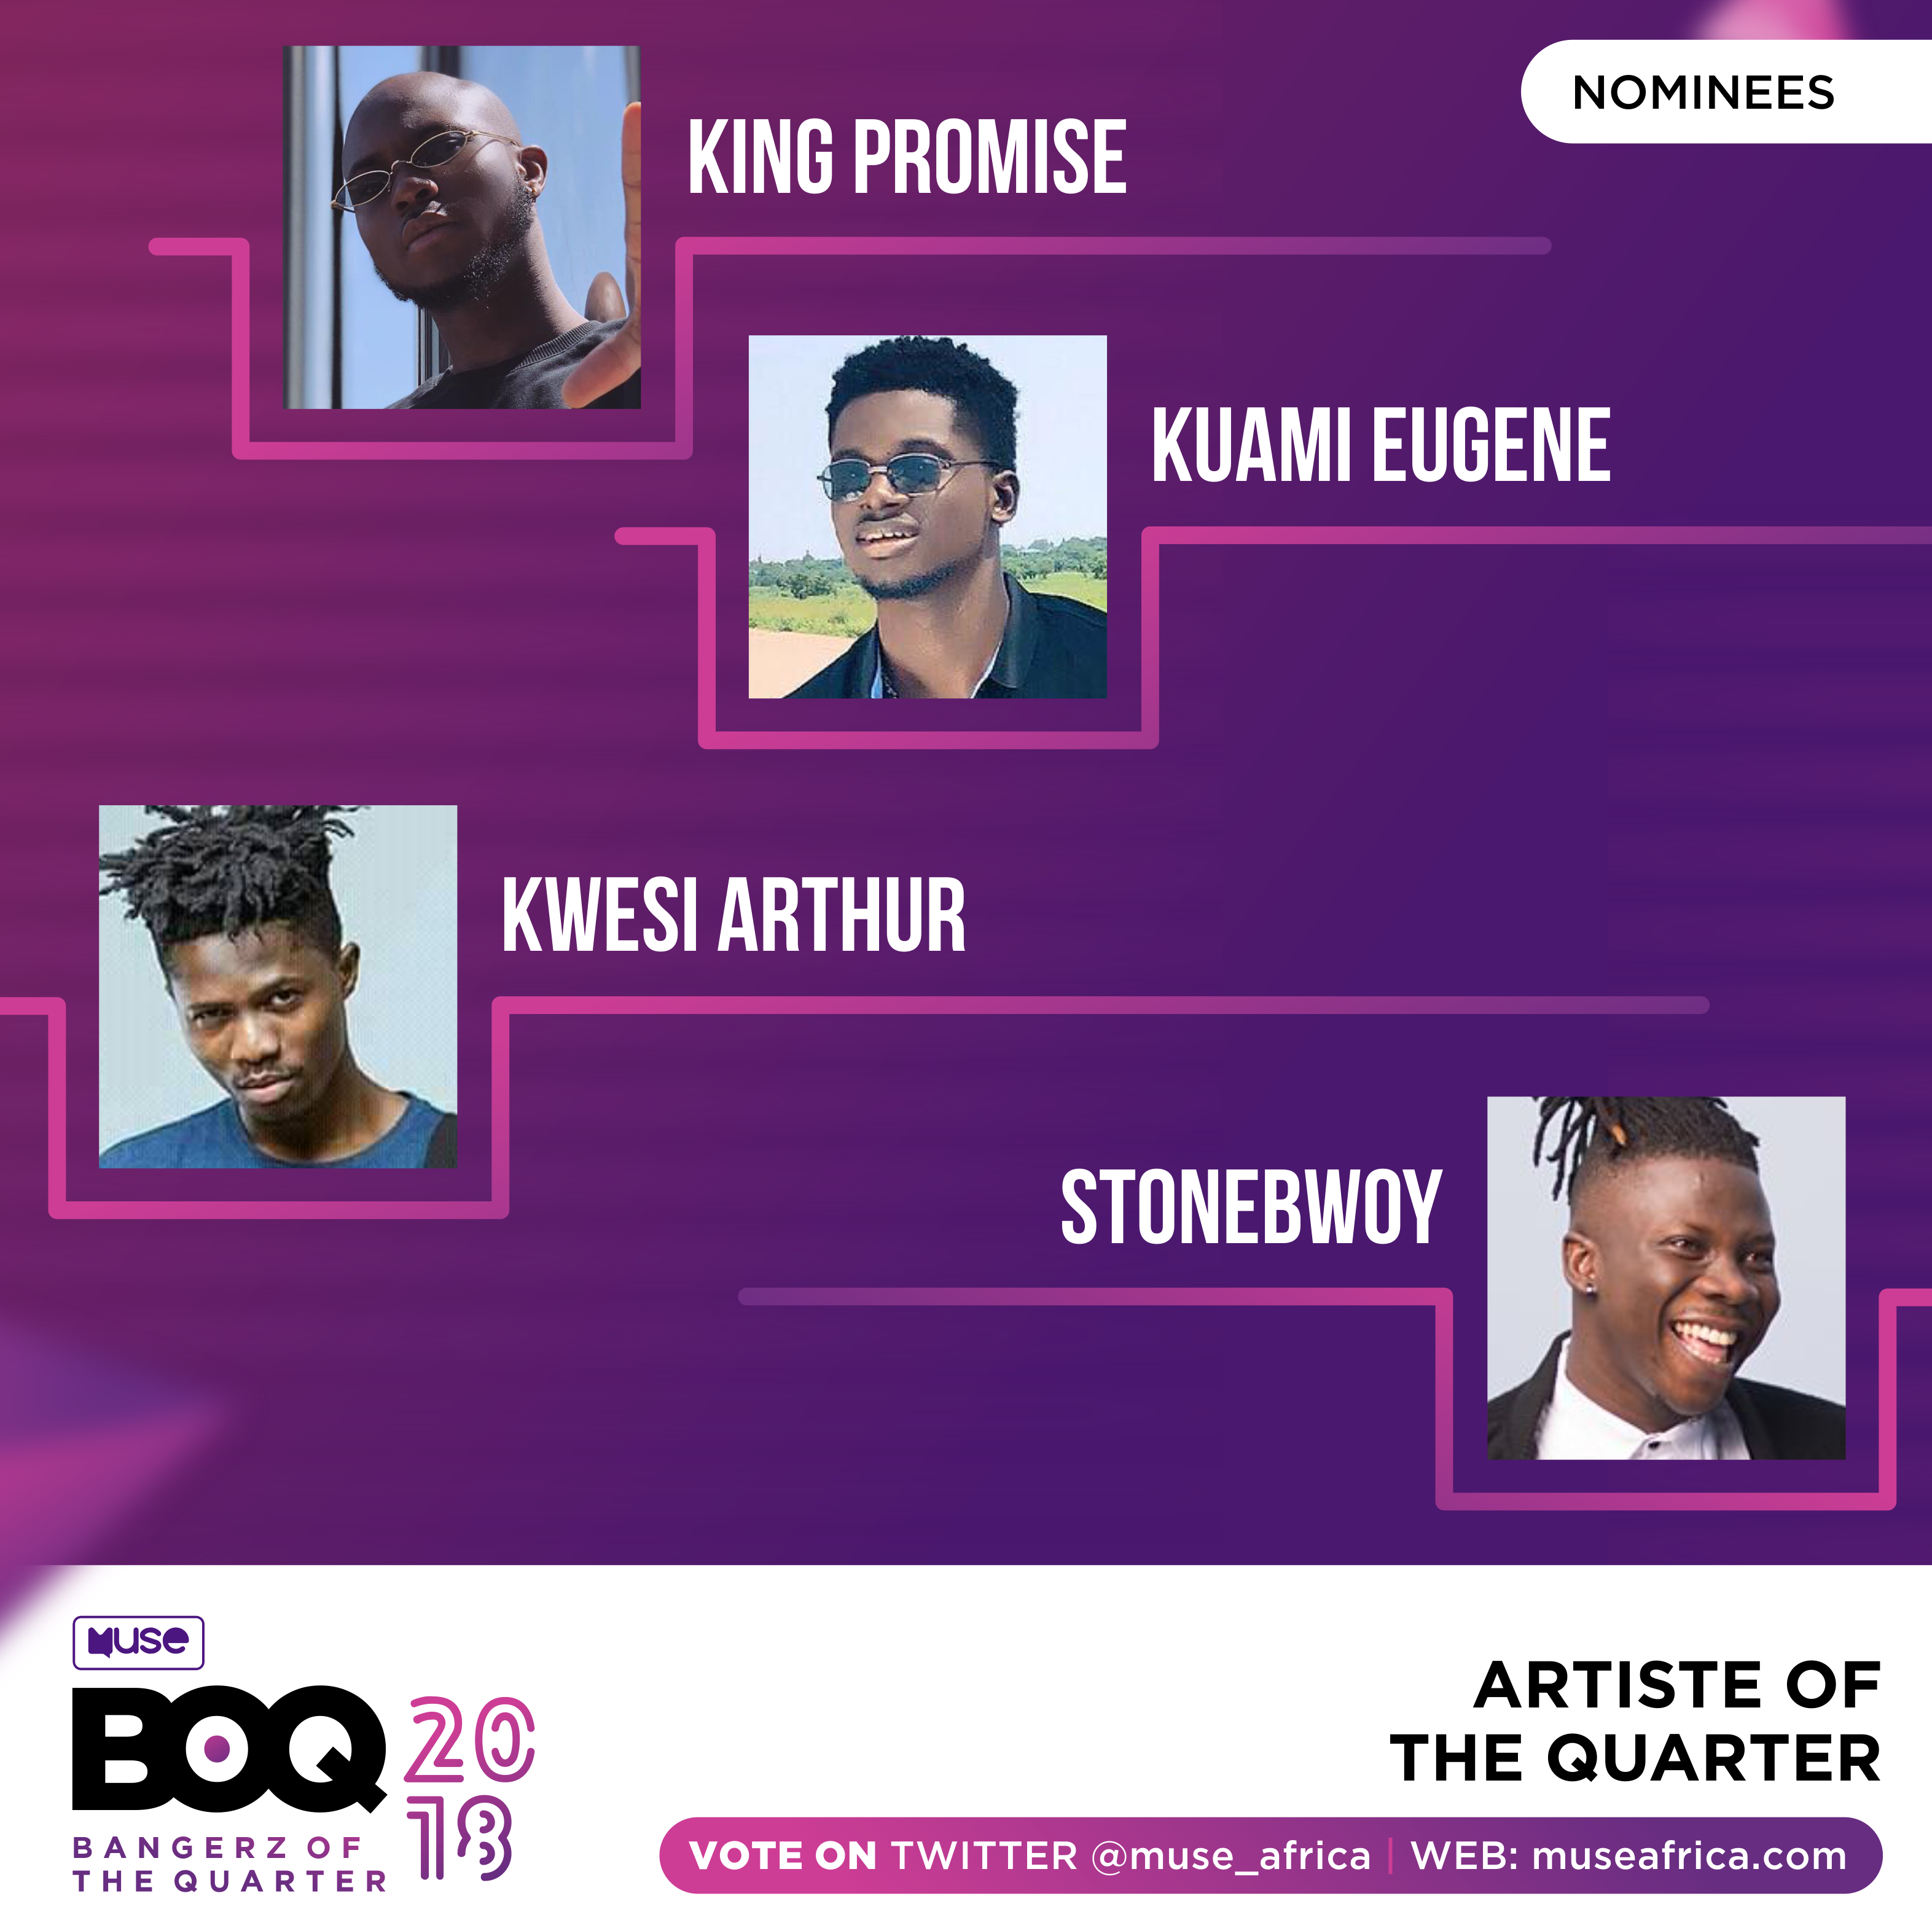 Kuami Eugene, King Promise, Medikal,Wendy Shay lead nominations at MuseAfrica’s “Bangerz of the Quarter” Awards